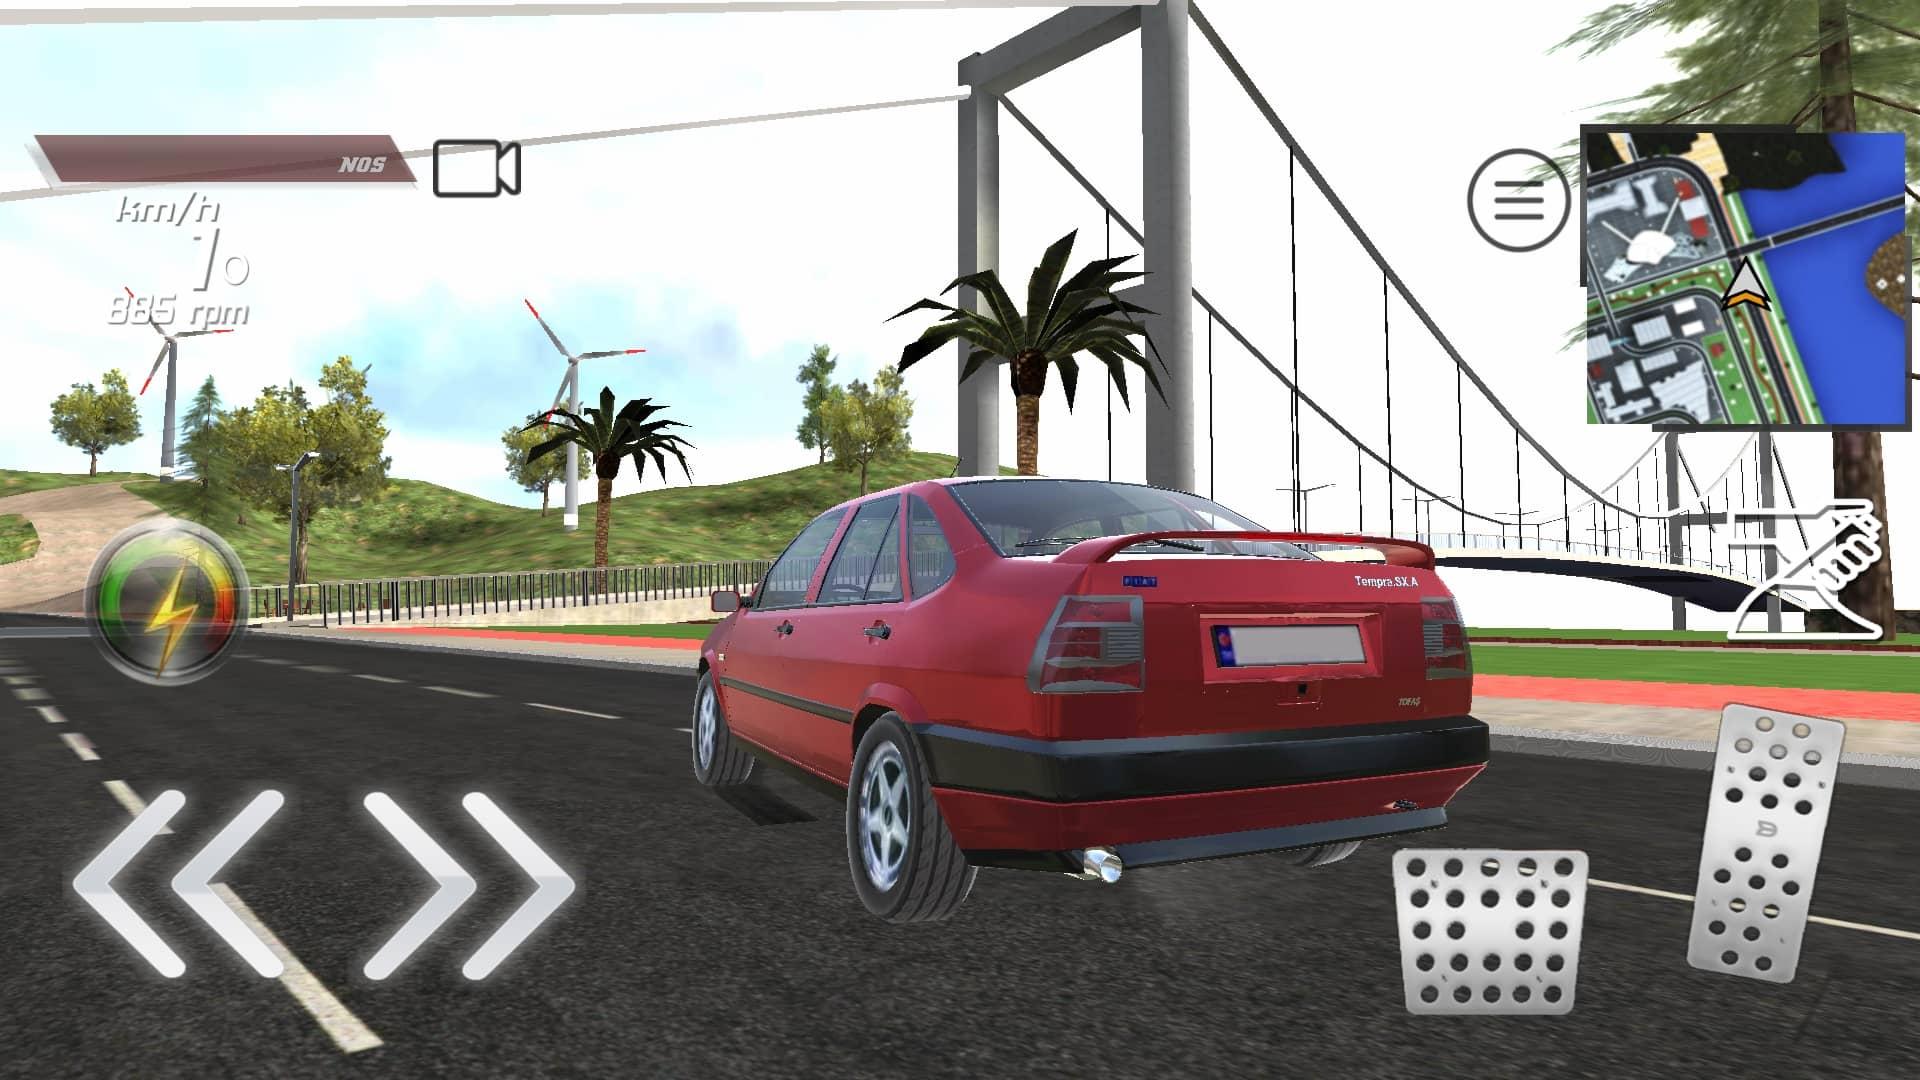 Tempra - City Simulation, Quests and Parking 1.7 Screenshot 2